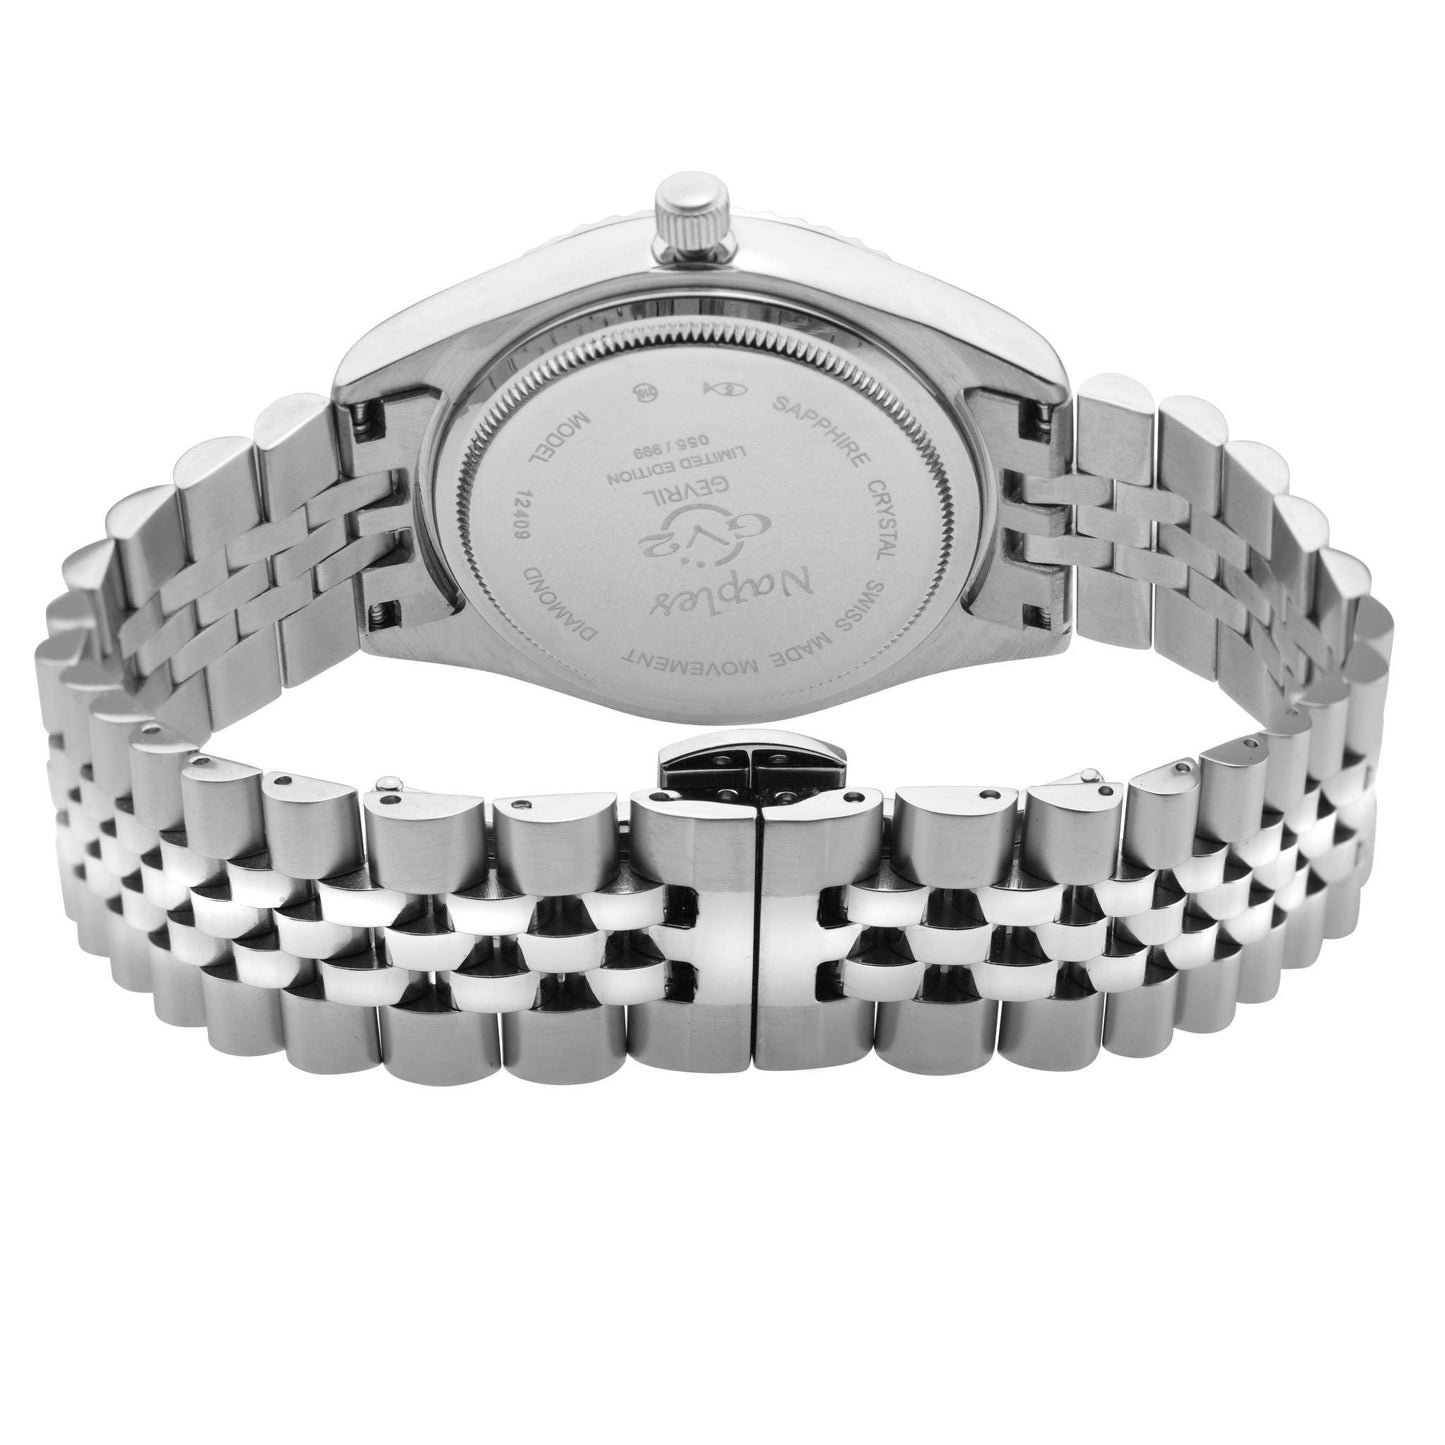 Gevril-Luxury-Swiss-Watches-GV2 Naples Diamond-12409